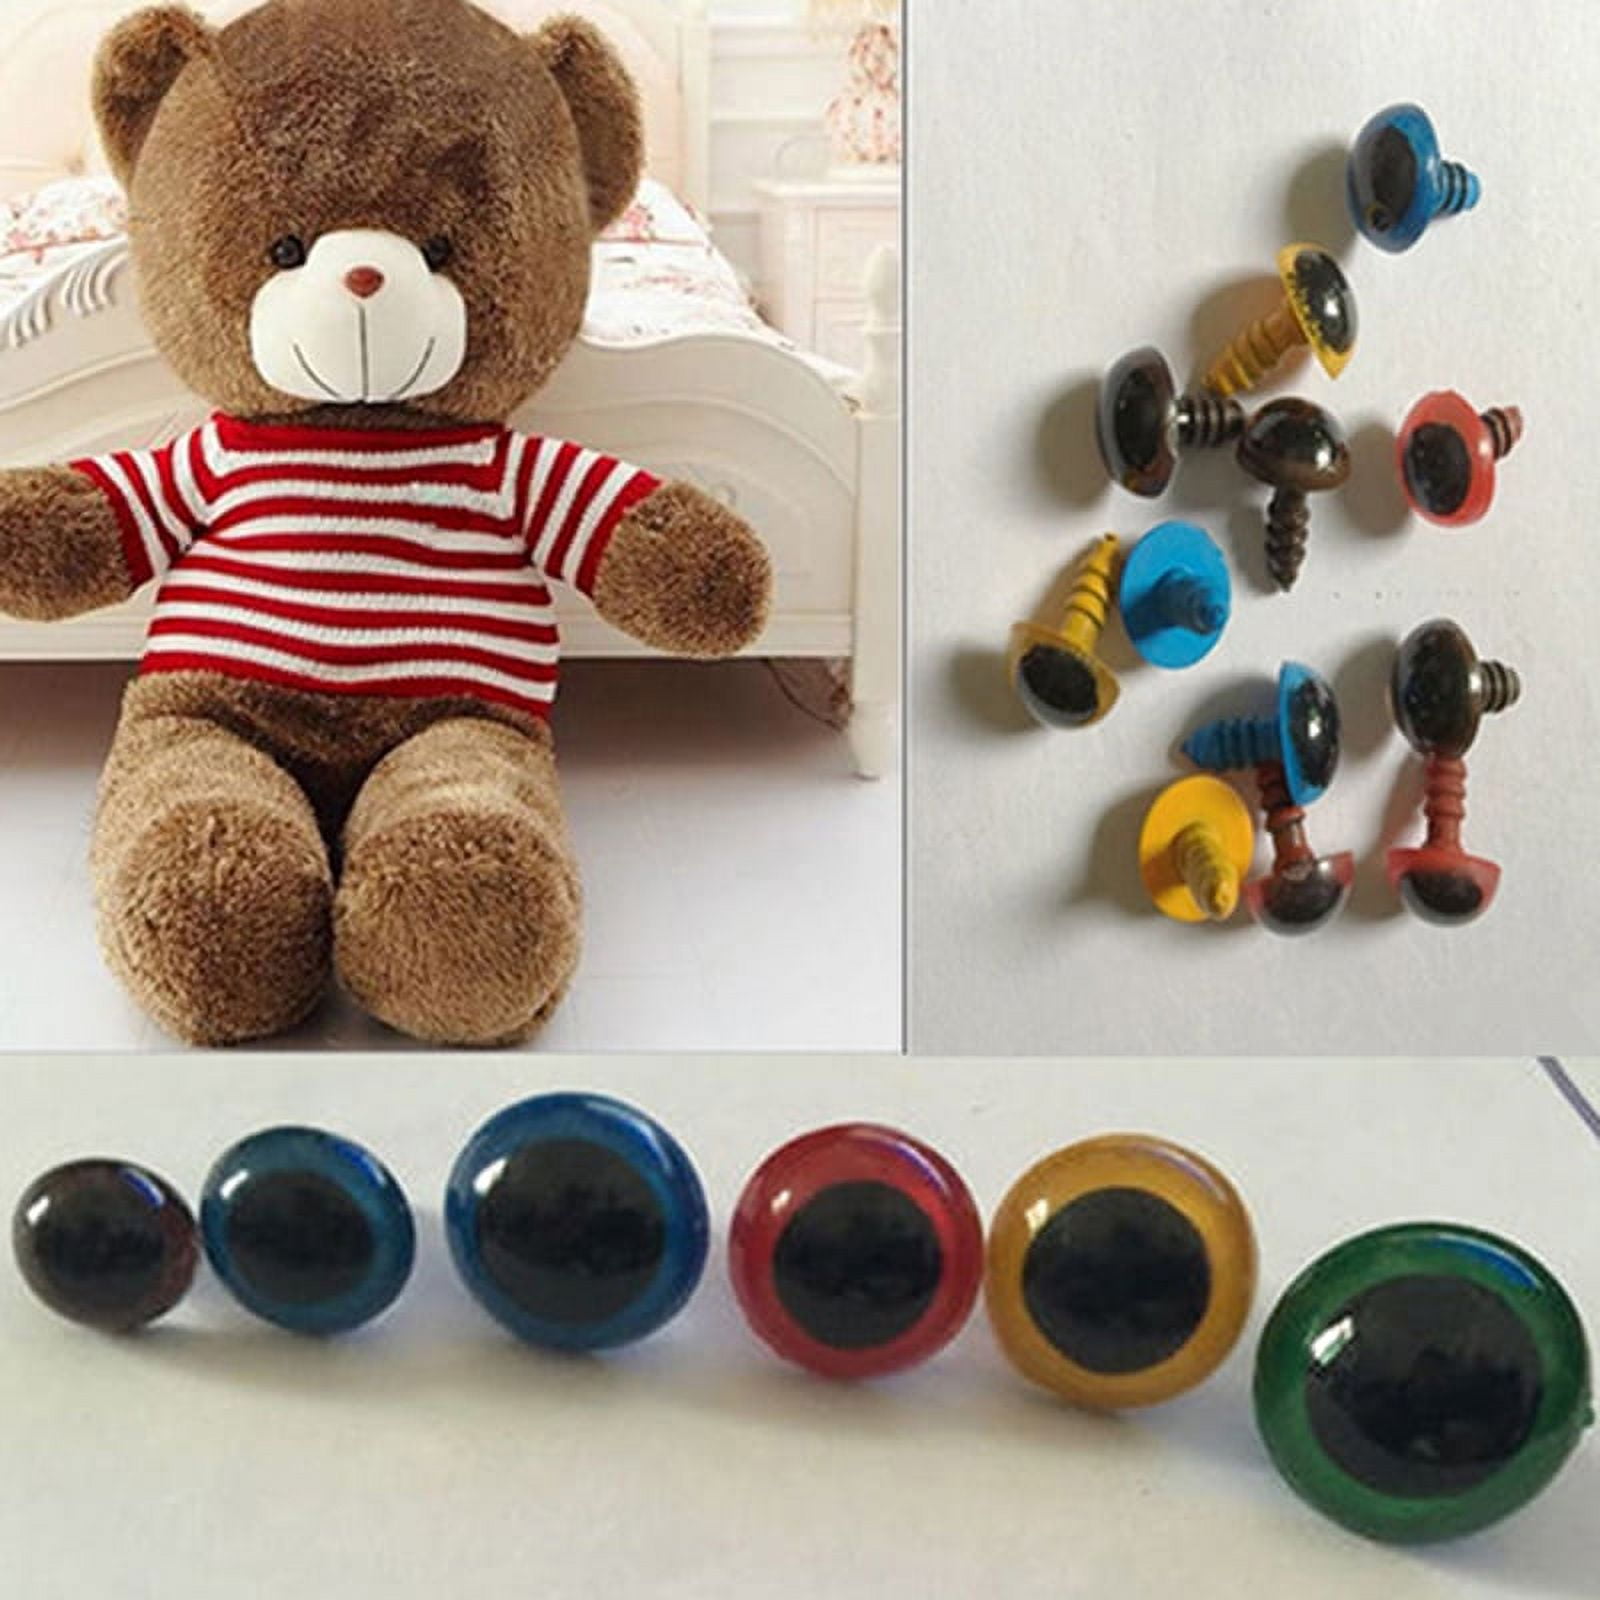 Flm 100 Pcs 8-20mm Plastic Safety Eyes for Teddy Bear Doll Animal Puppet  Craft DIY 